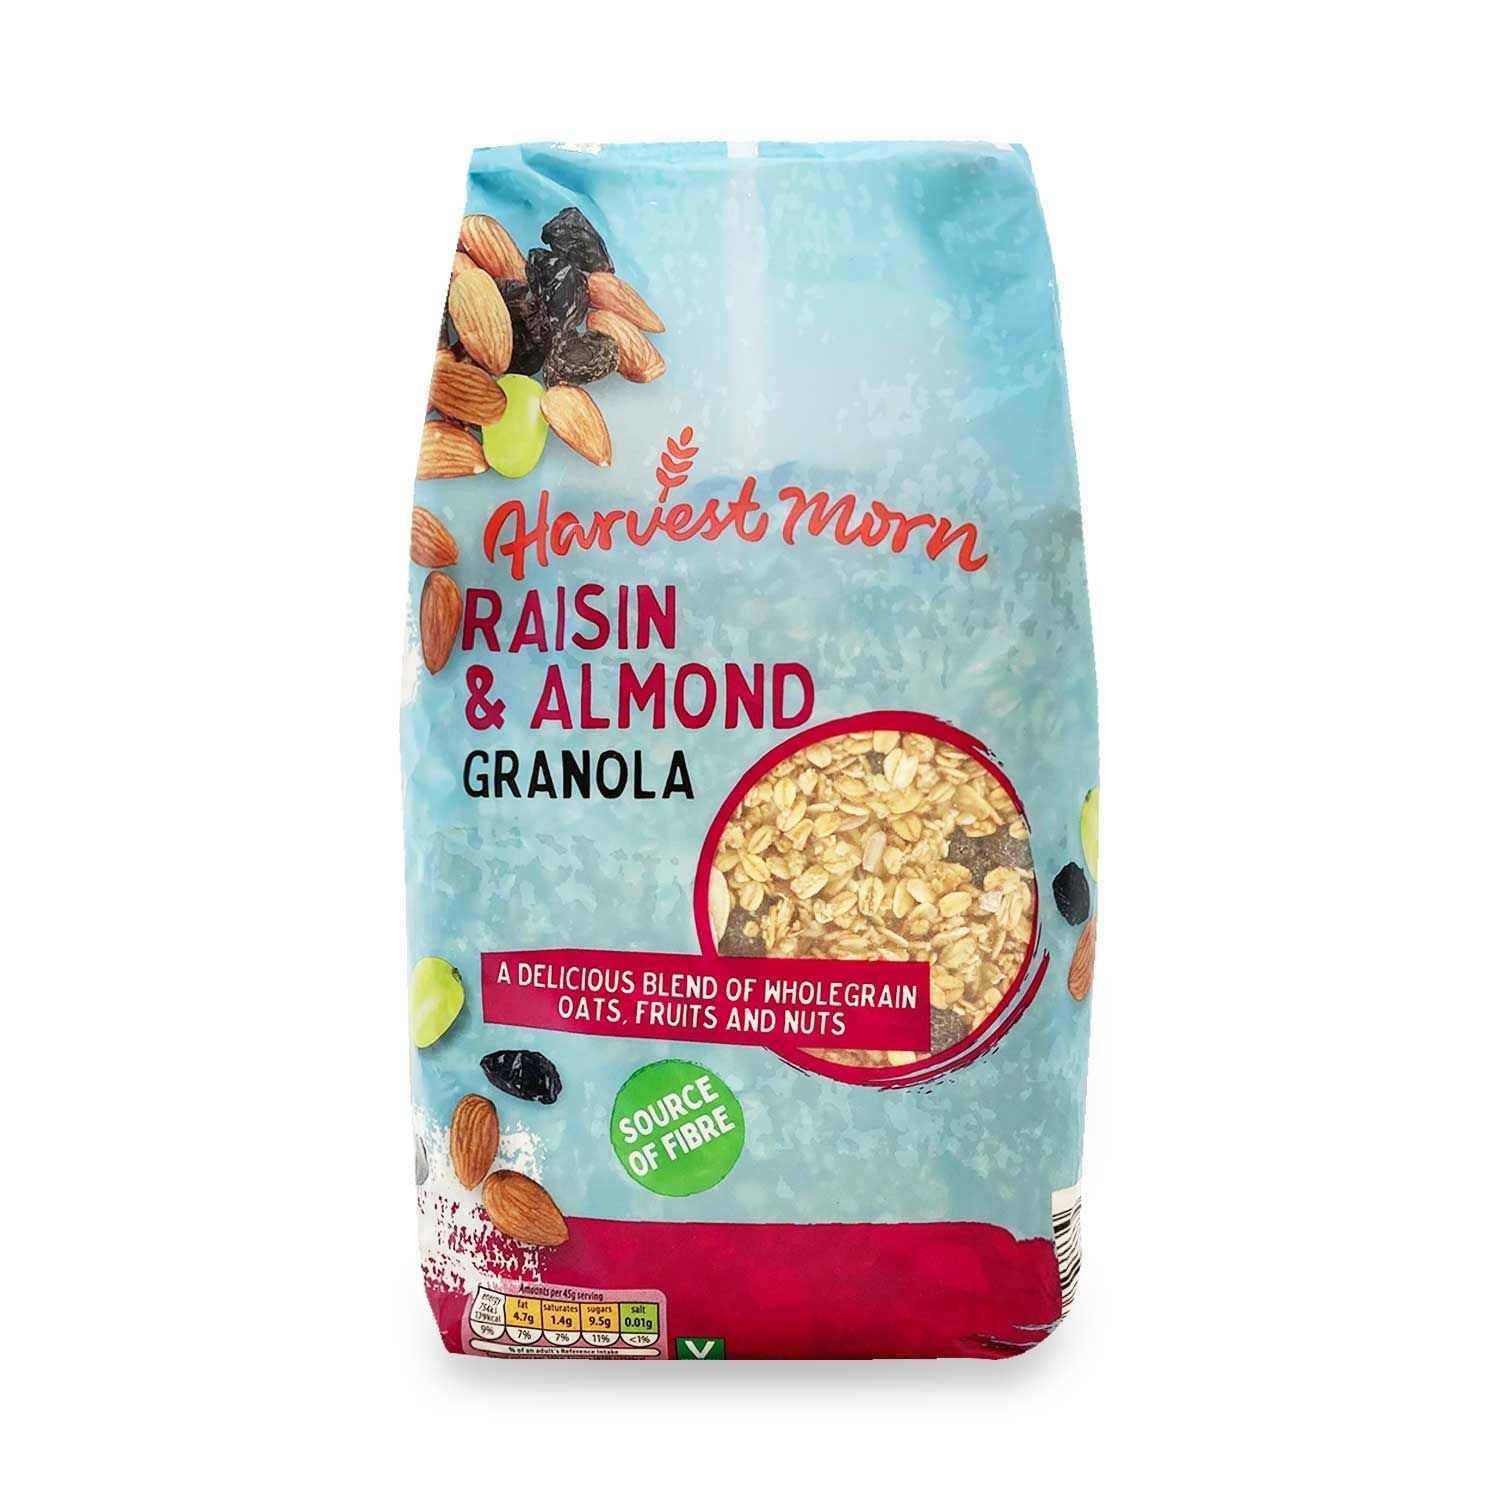 WAO - Harvest Morn Raisin & Almond Granola 1kg 1x4